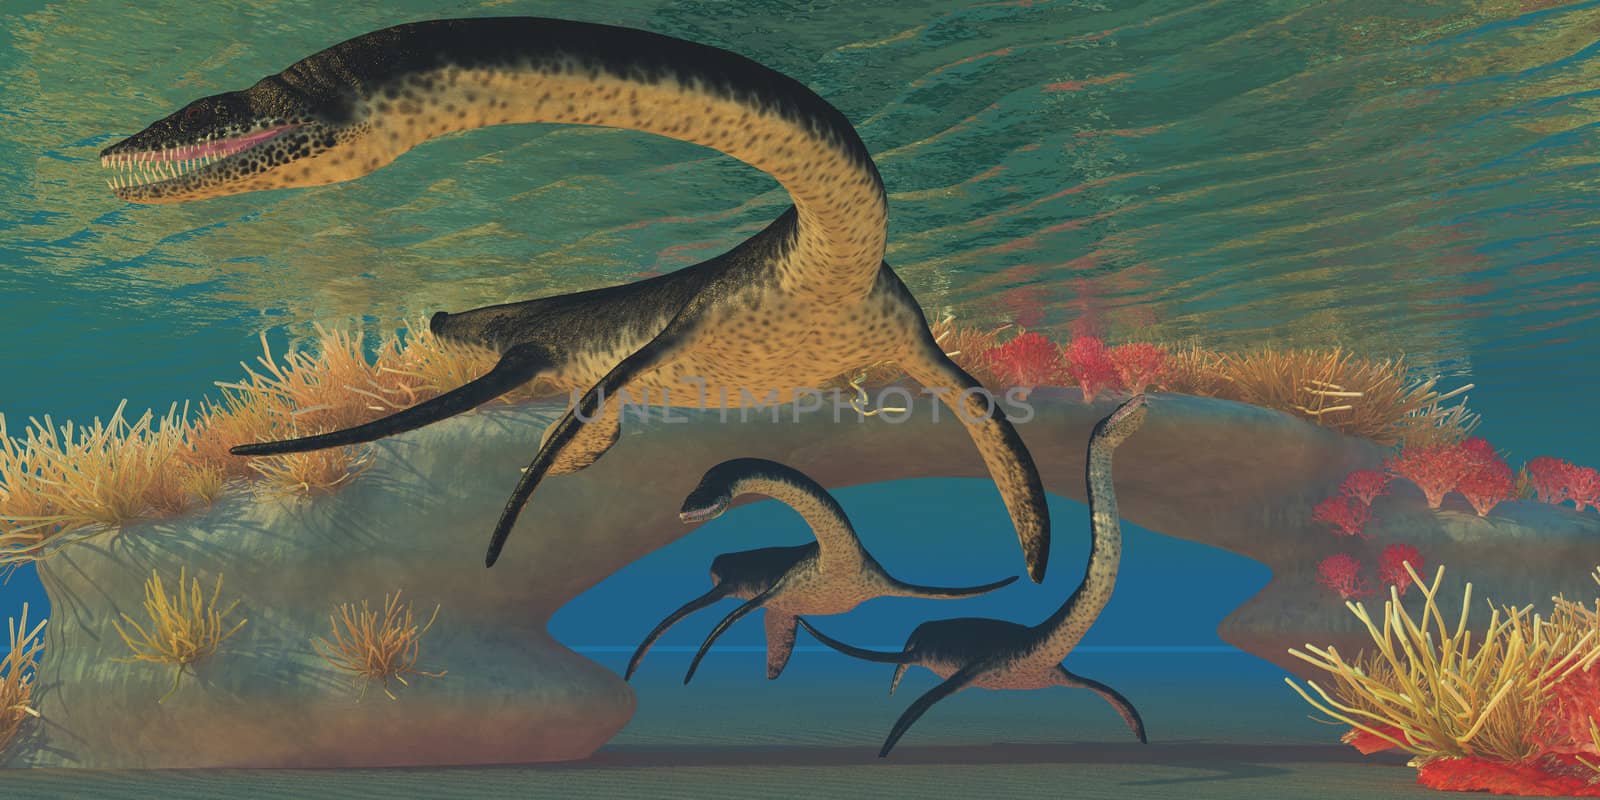 Three Plesiosaurs dinosaurs swim near a natural coral reef bridge in shallow seas.